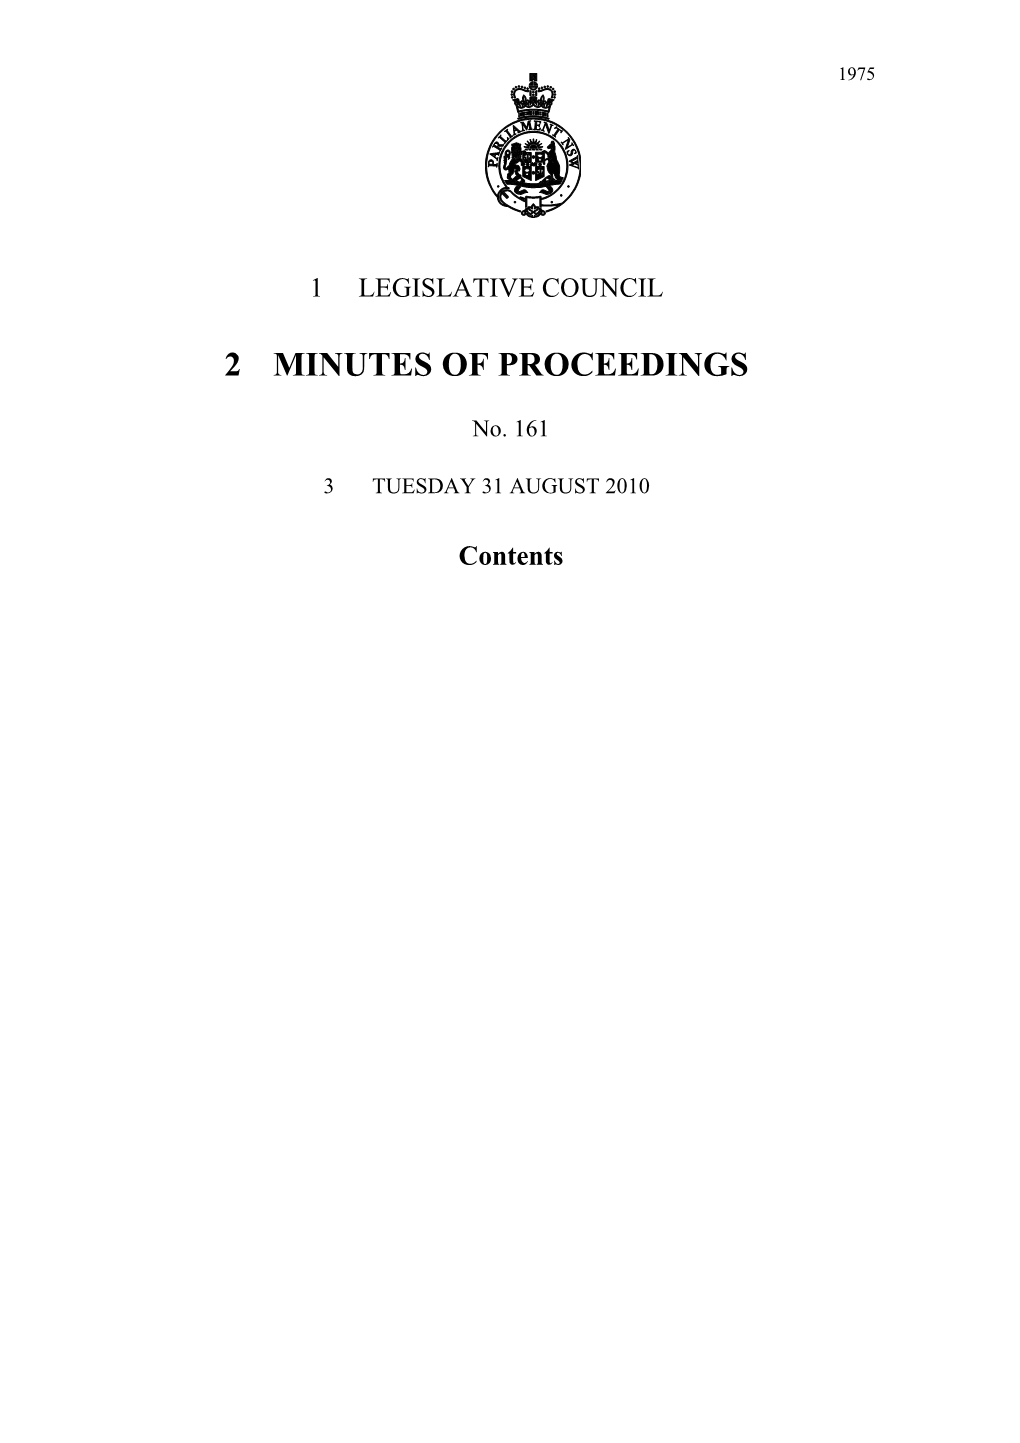 Legislative Council Minutes No. 161 Tuesday 31 August 2010